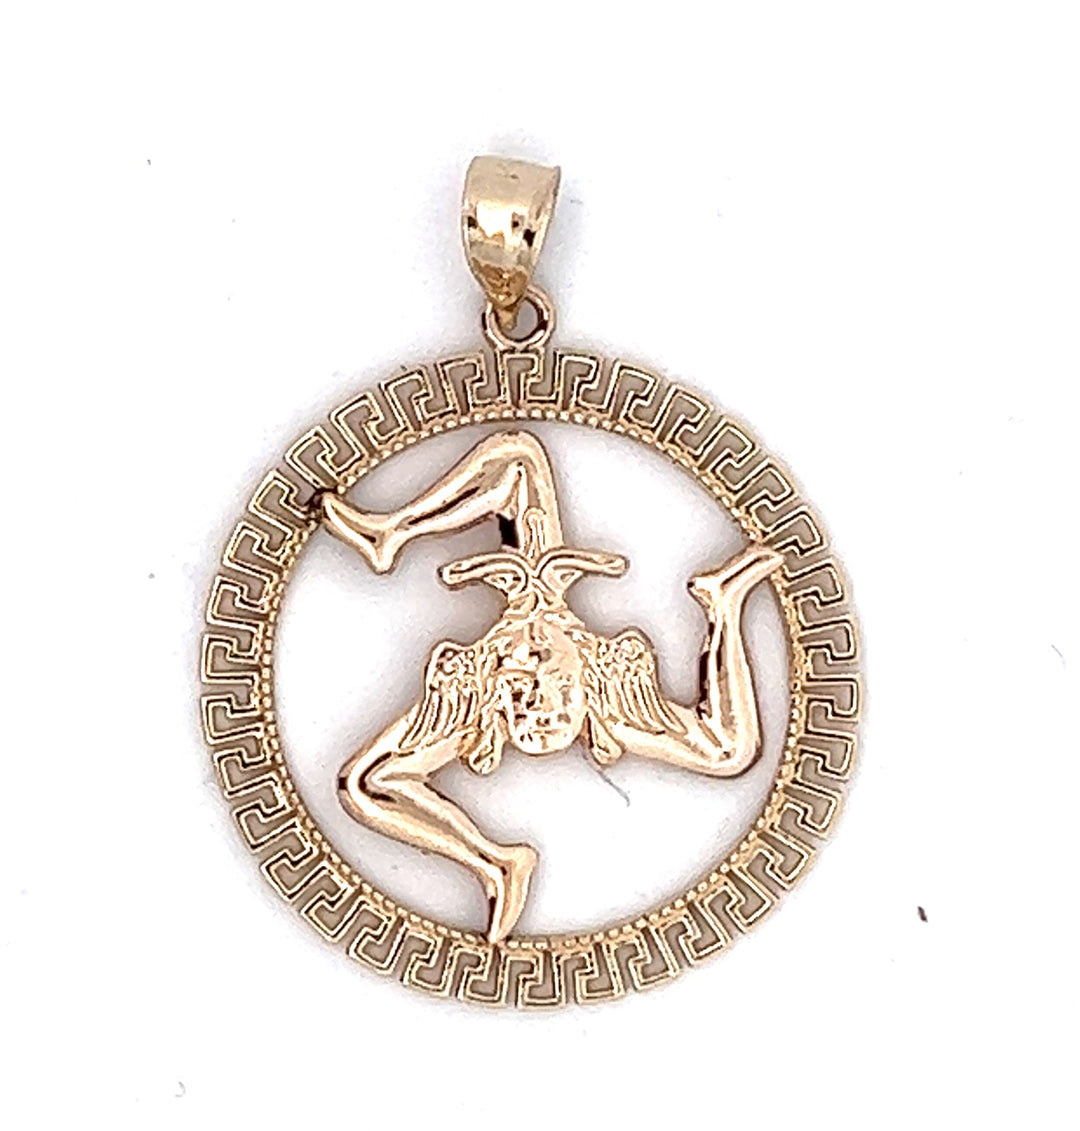 14 Karat Yellow Gold Medium Trinacria Pendant with Key Bezel small 18mm - Tivoli Jewelers